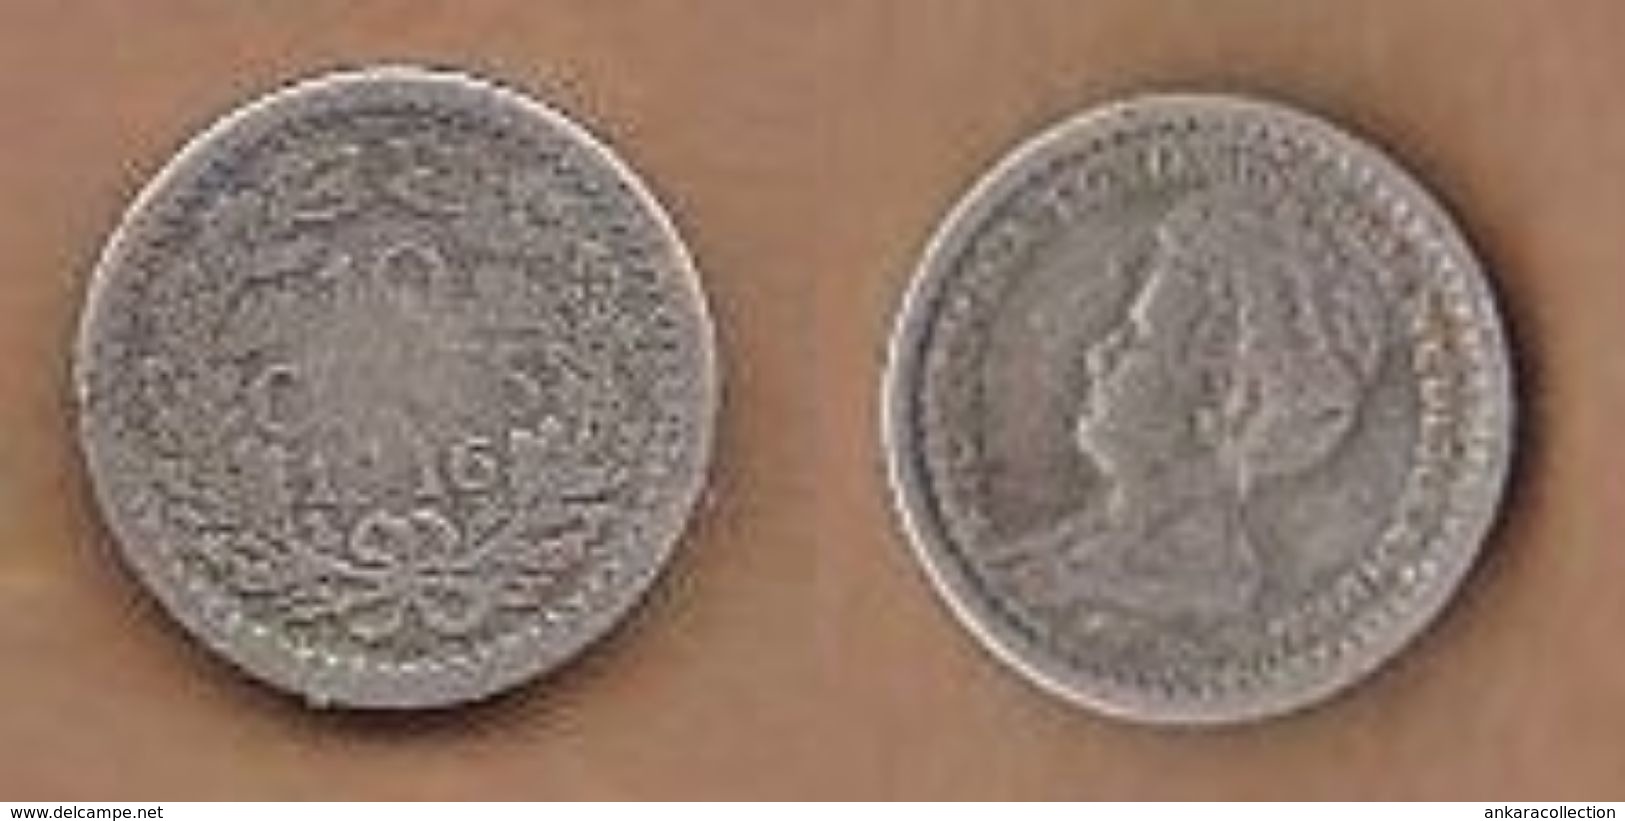 AC - NETHERLANDS - 1916 - 10 CENTS SILVER COIN - QUEEN WILHELMINA I - 10 Cent